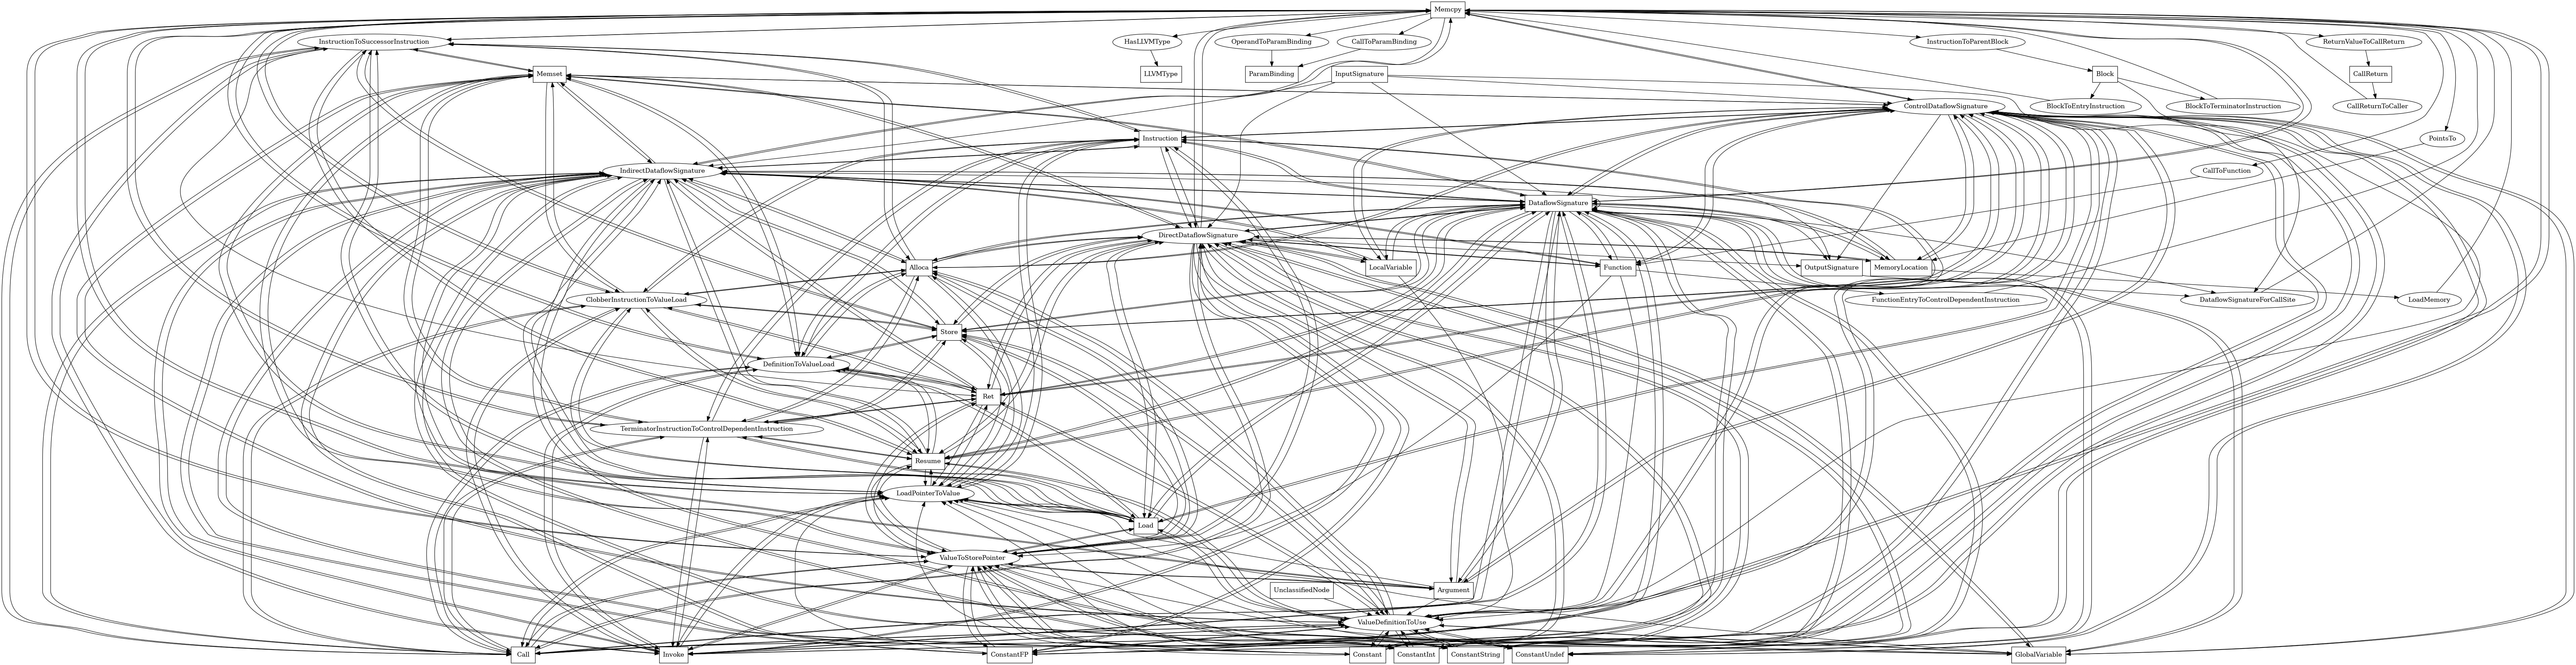 Entity-relationship diagram for Memcpy nodes